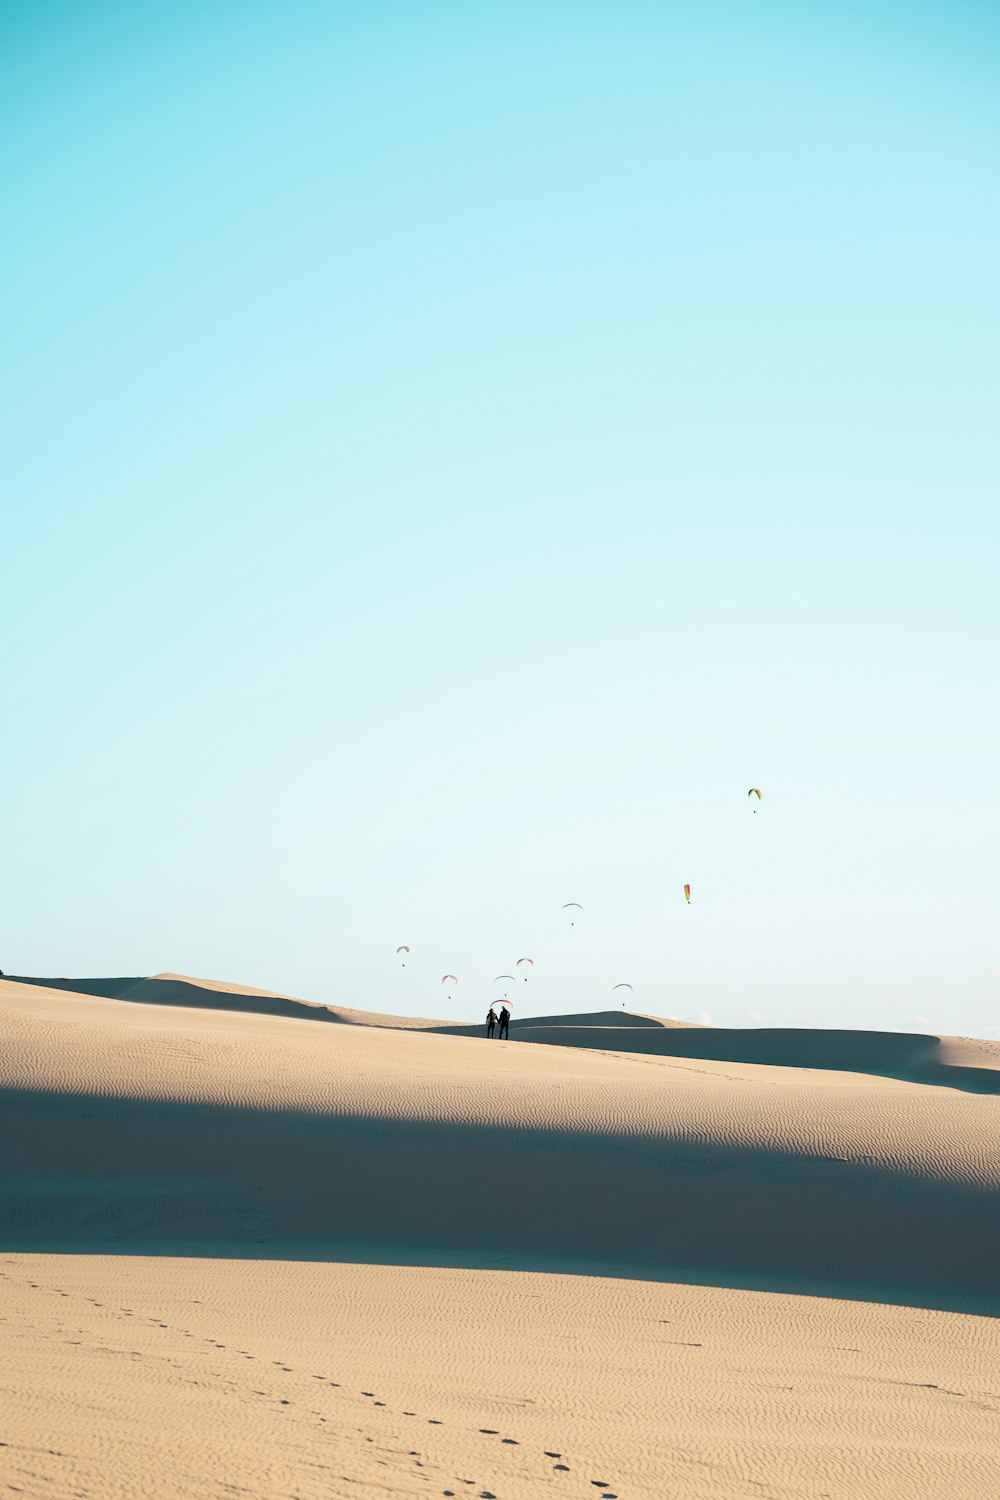 people walking on desert under blue sky during daytime